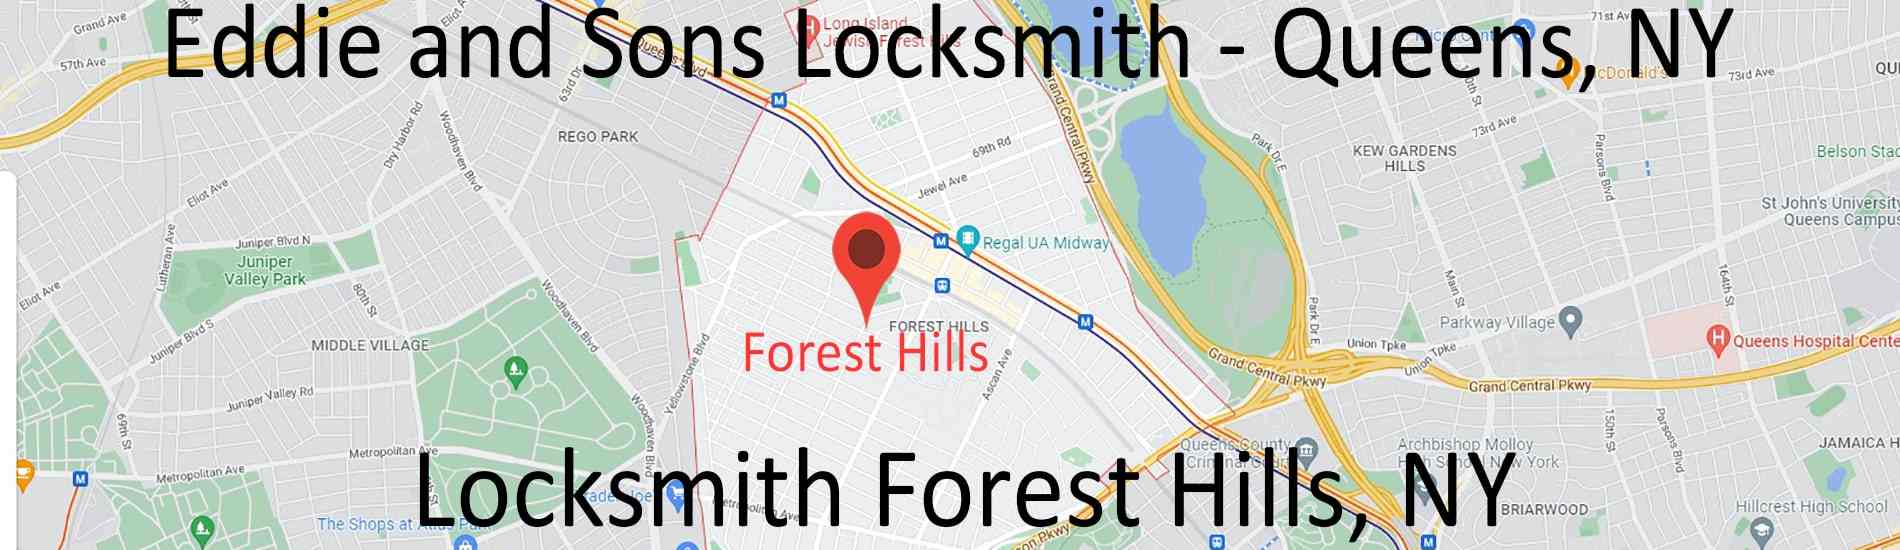 forest hills locksmith - Eddie and Sons Locksmith – Queens, NY